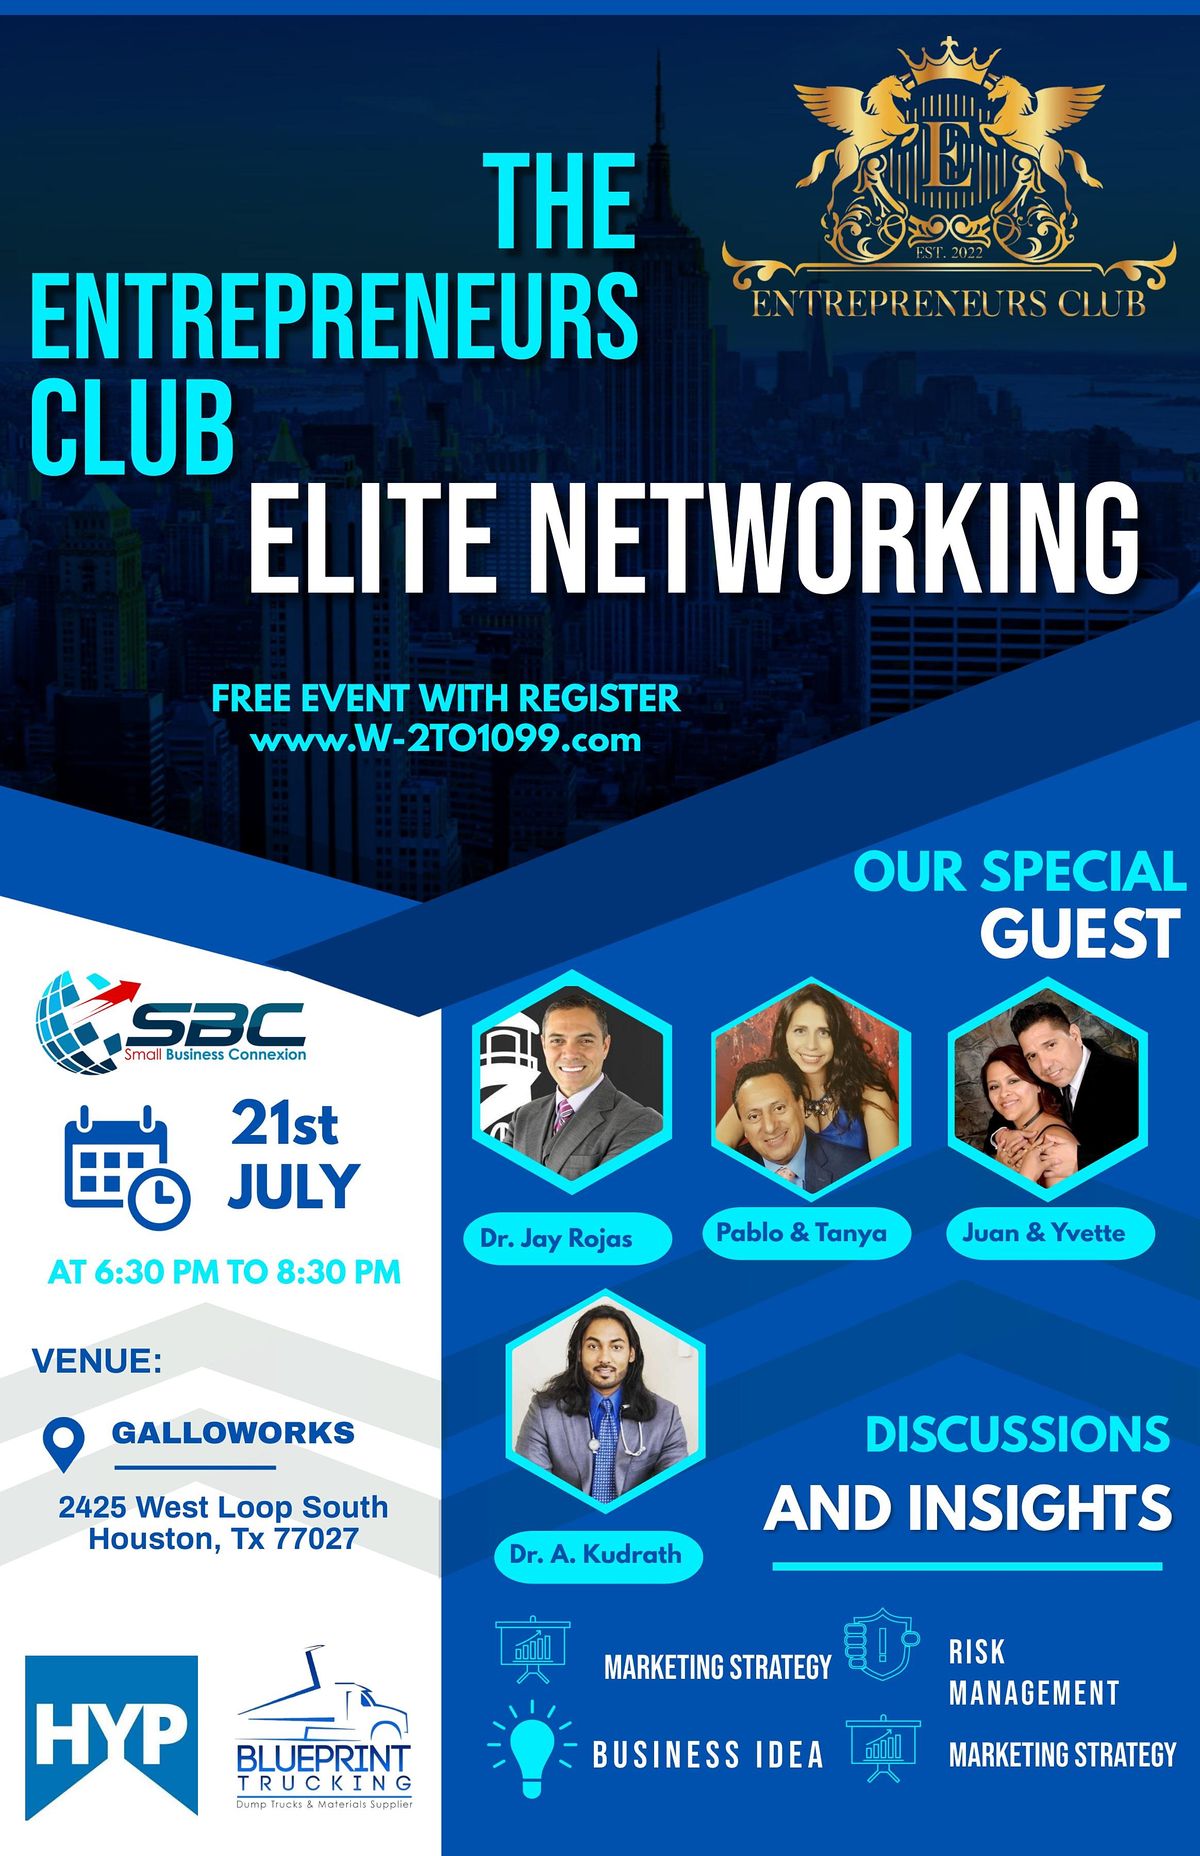 The Entrepreneurs Club Elite Networking